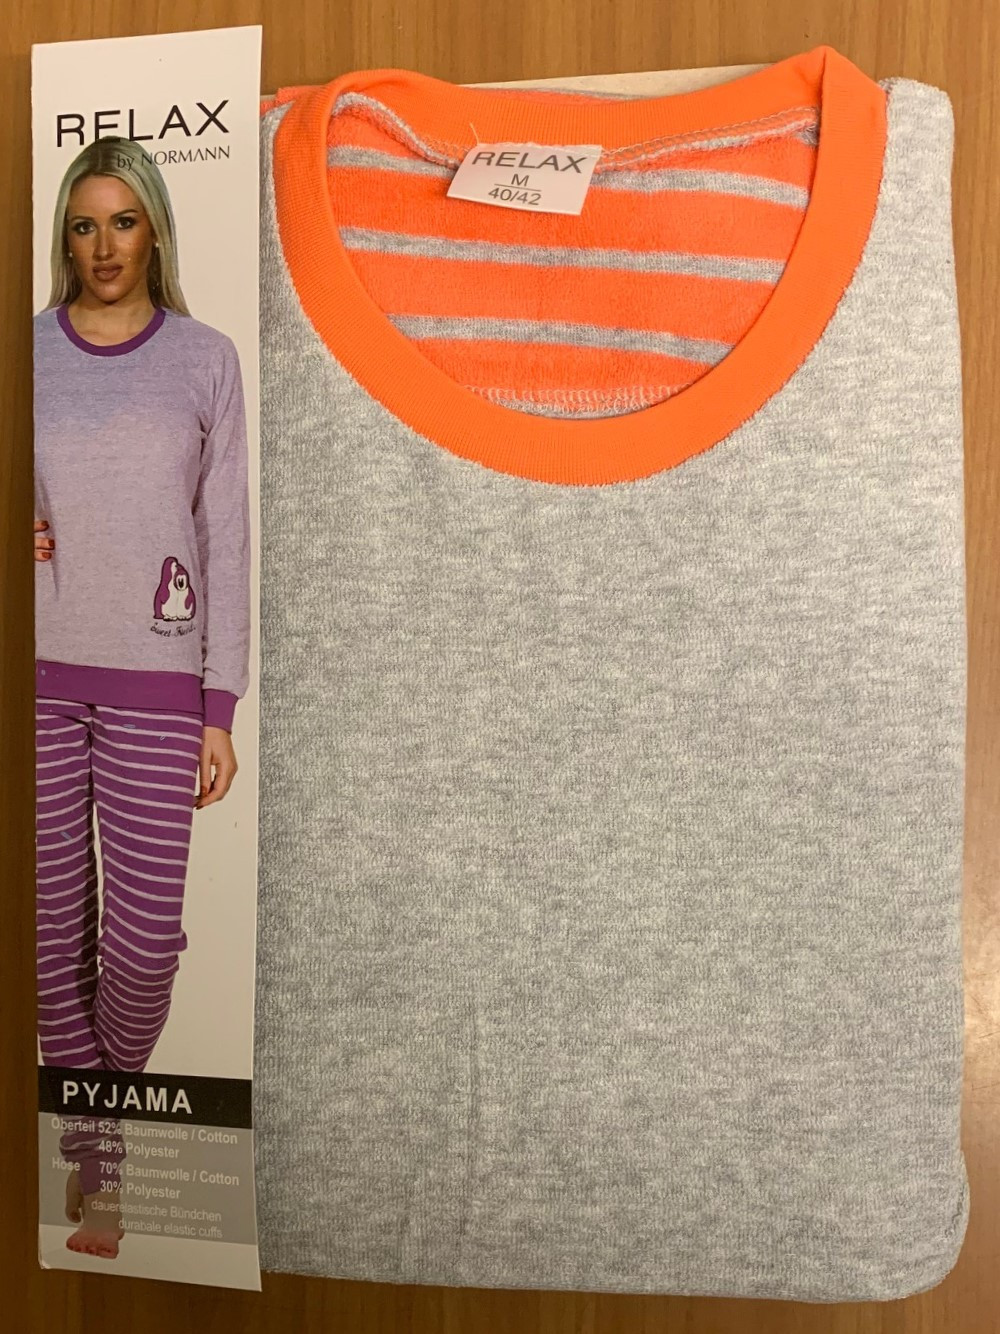 Normann badstof dames pyjama Relax 67249-Oranje-XL 48/50